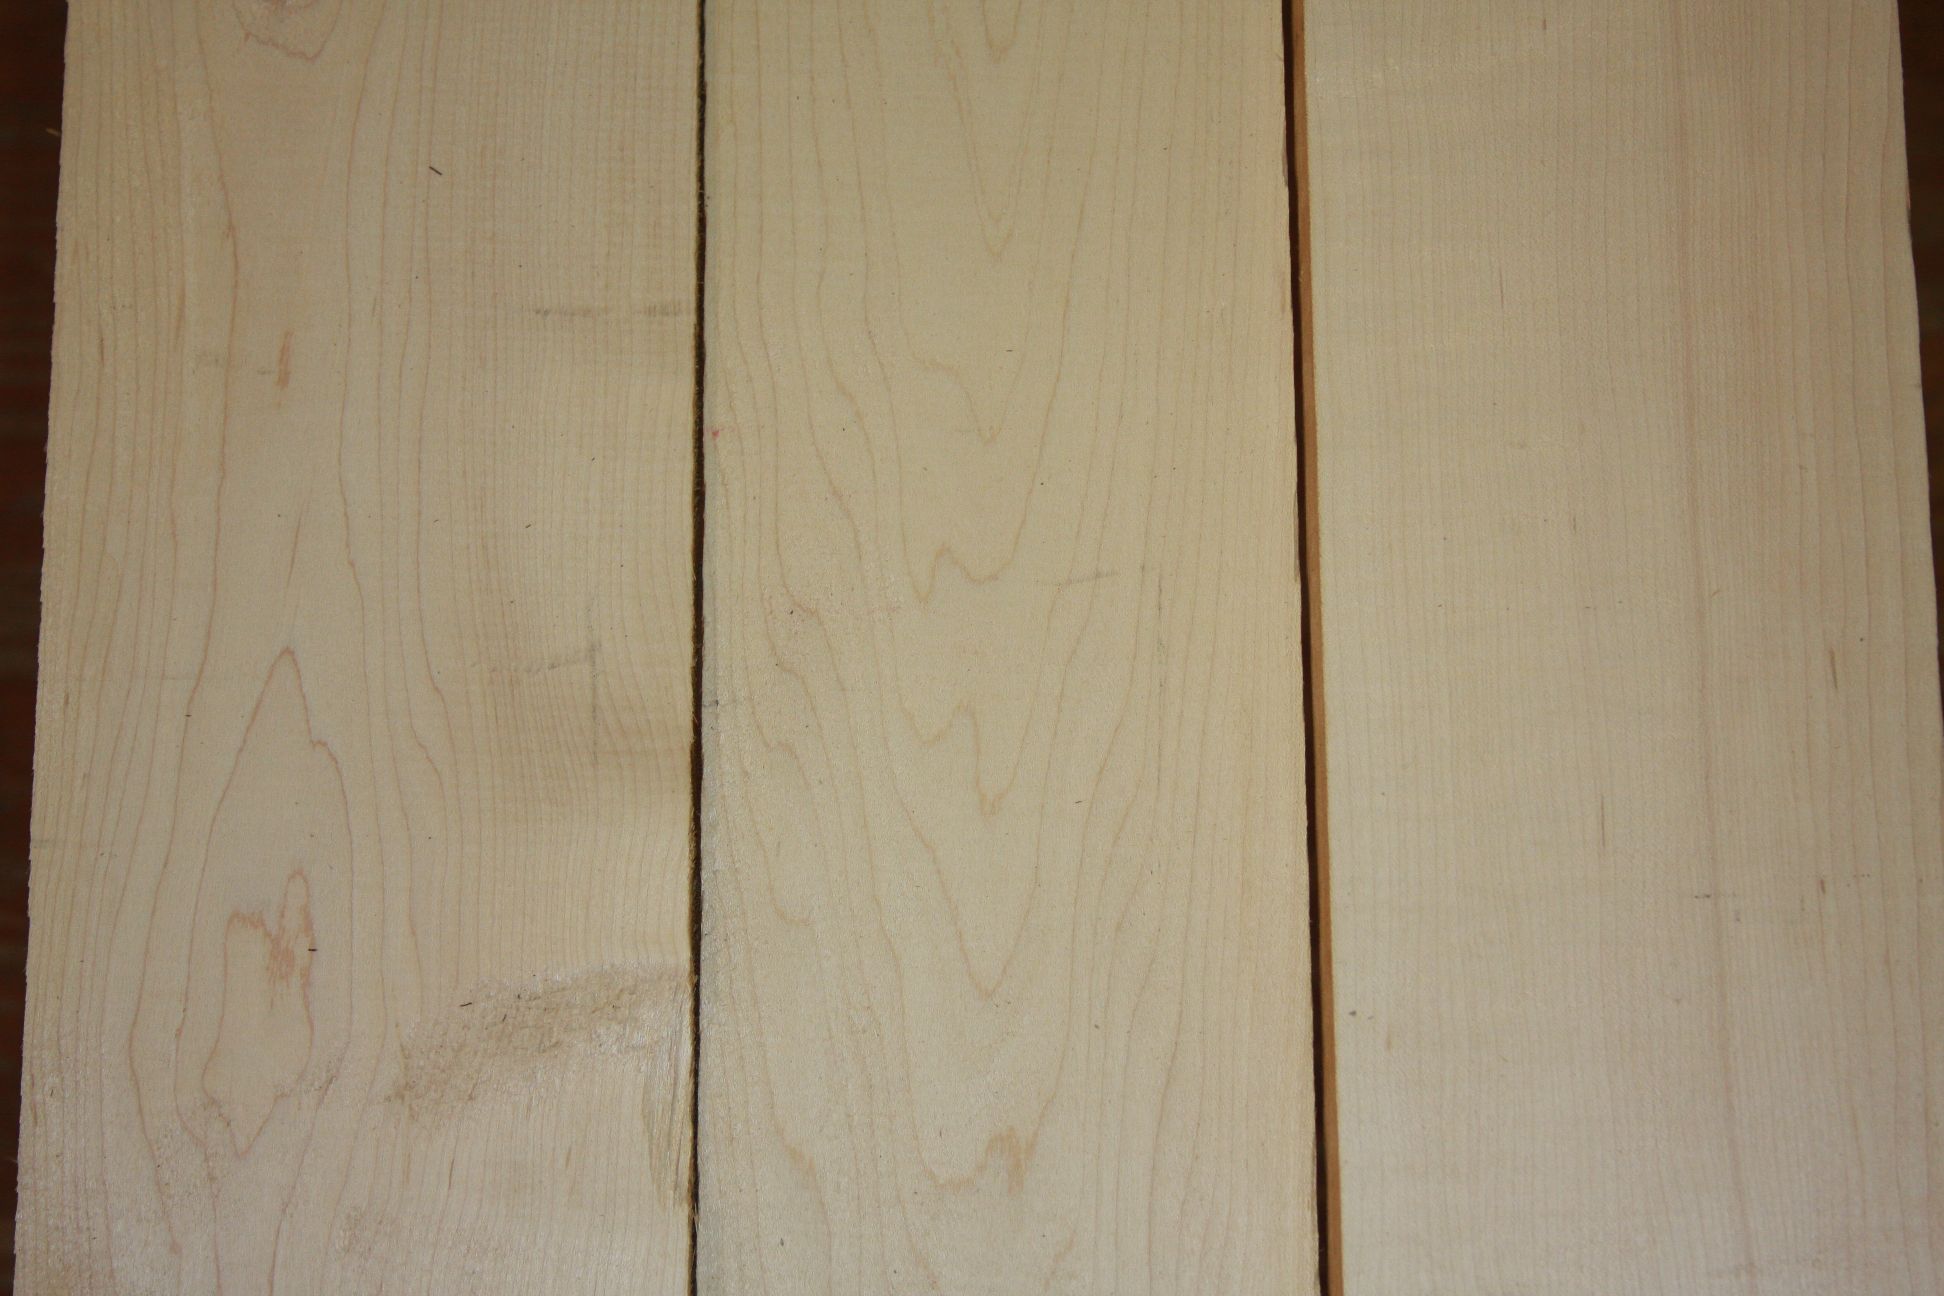 16/4 White Hard Maple 20BF Lumber Pack | CR Muterspaw Lumber